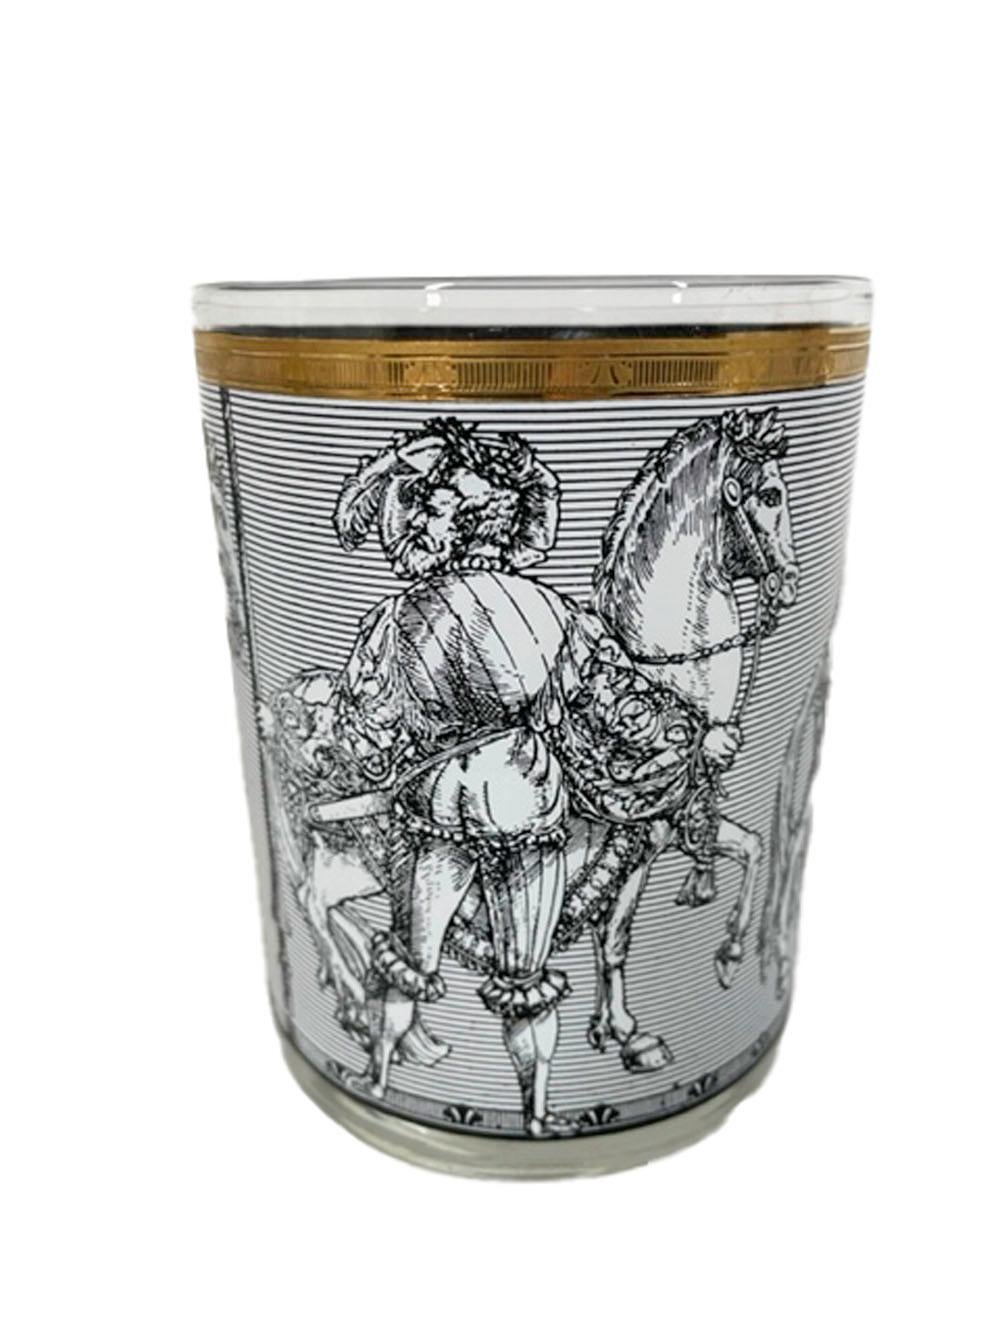 American Vintage Cera Glassware Camelot Pattern Rocks Glasses in Black and White For Sale